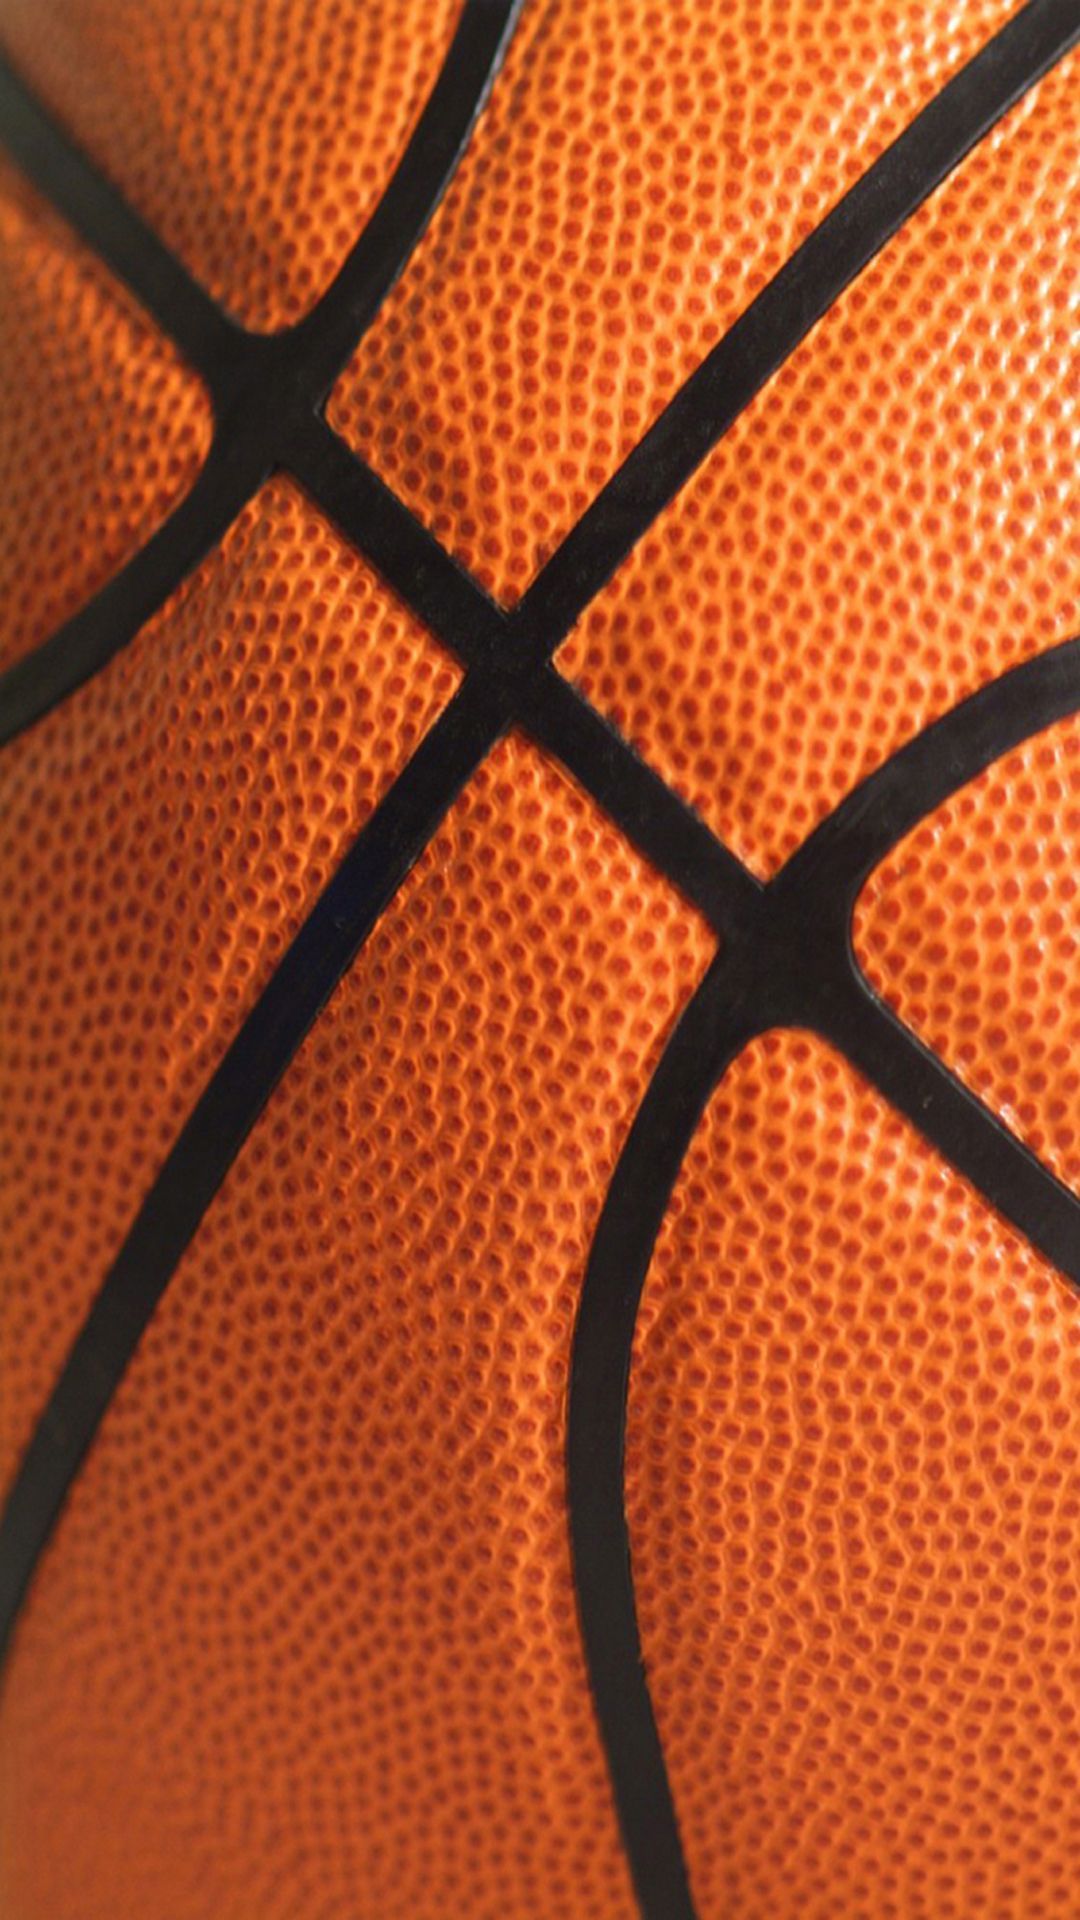 Basketball Galaxy S4 Wallpaper 1080x1920